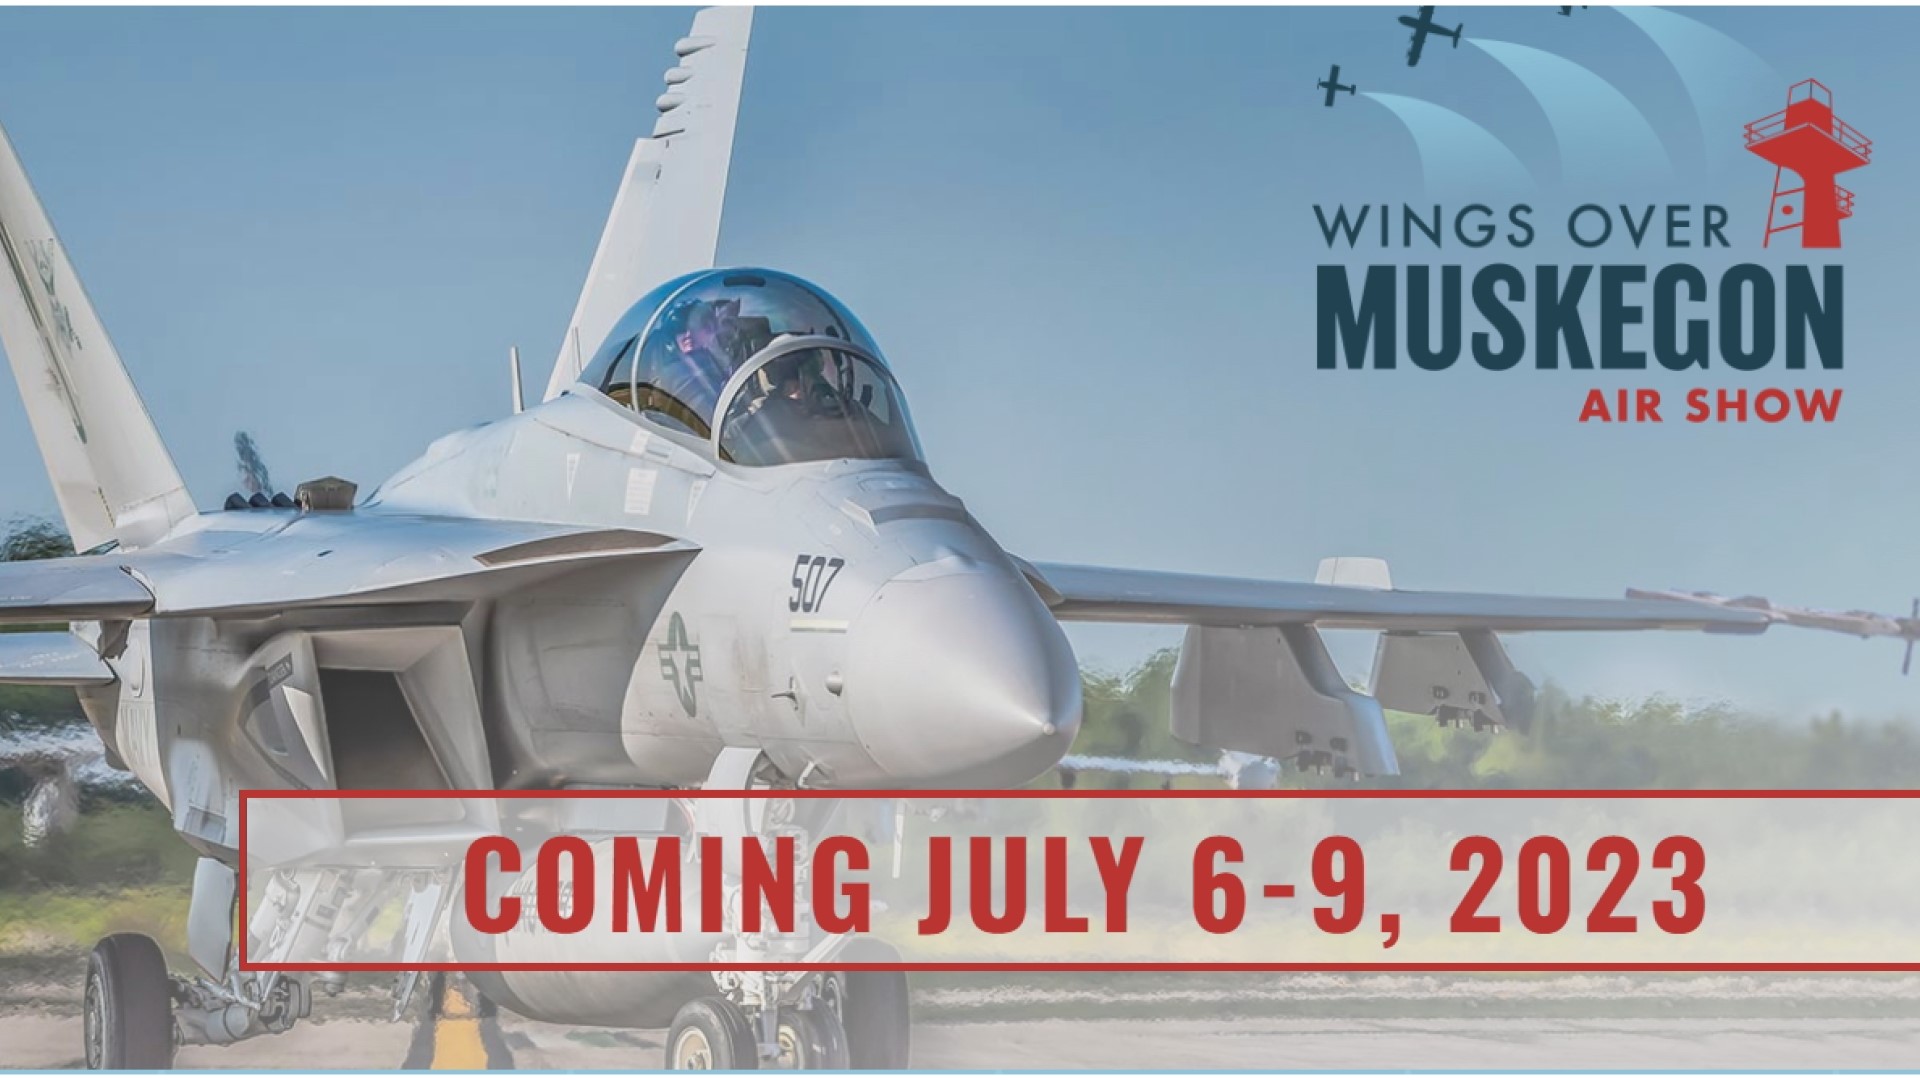 Yankee Air Museum brings an air show back to Muskegon